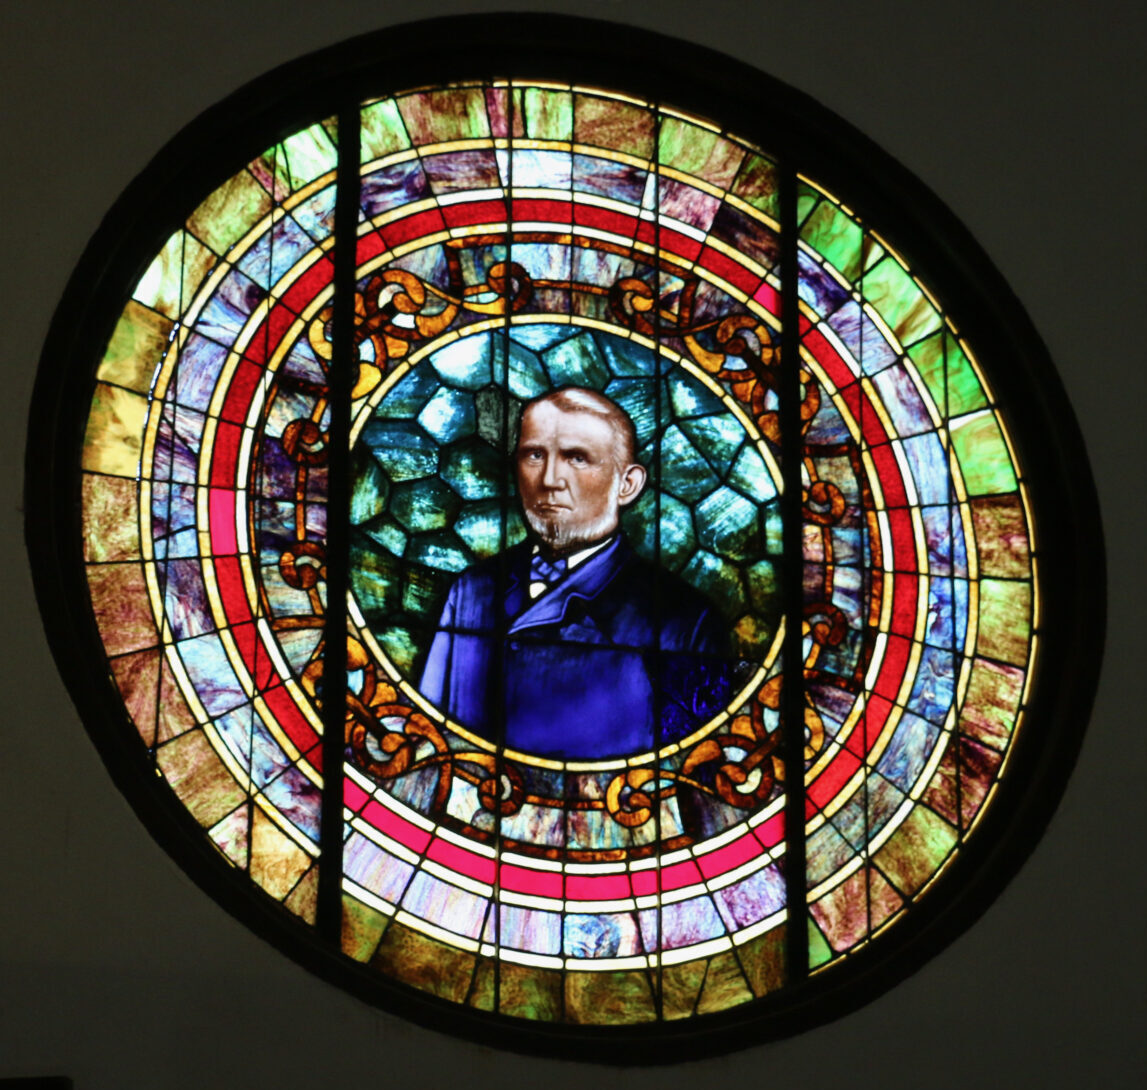 Washington Duke stained glass window, Hayti Heritage Center